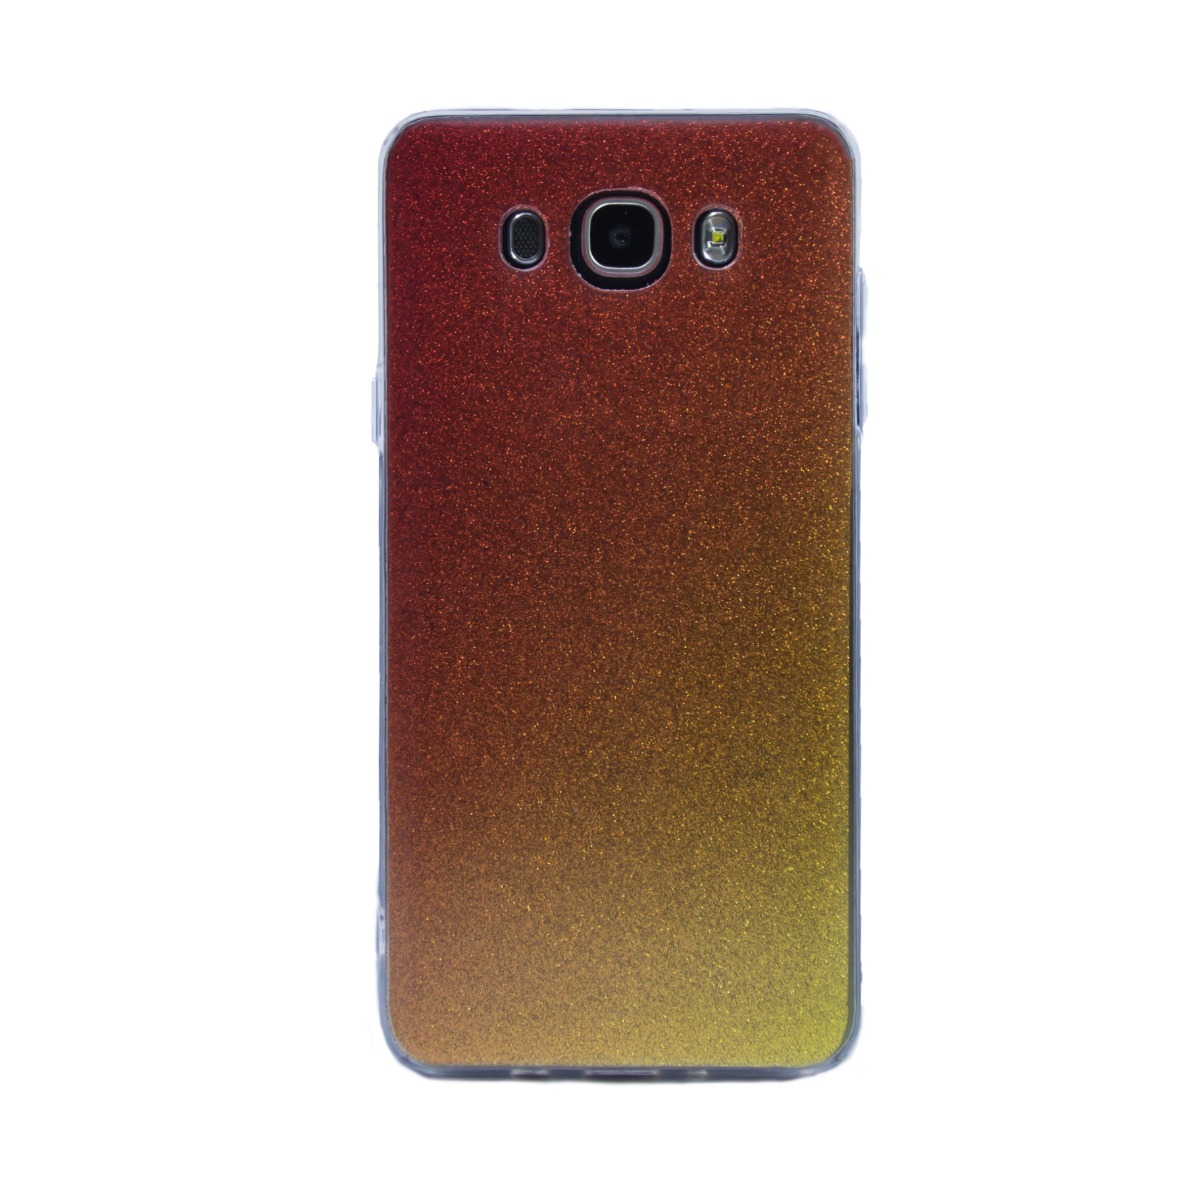 Husa fashion Samsung Galaxy J7 2016 Contakt Glitter Auriu thumb